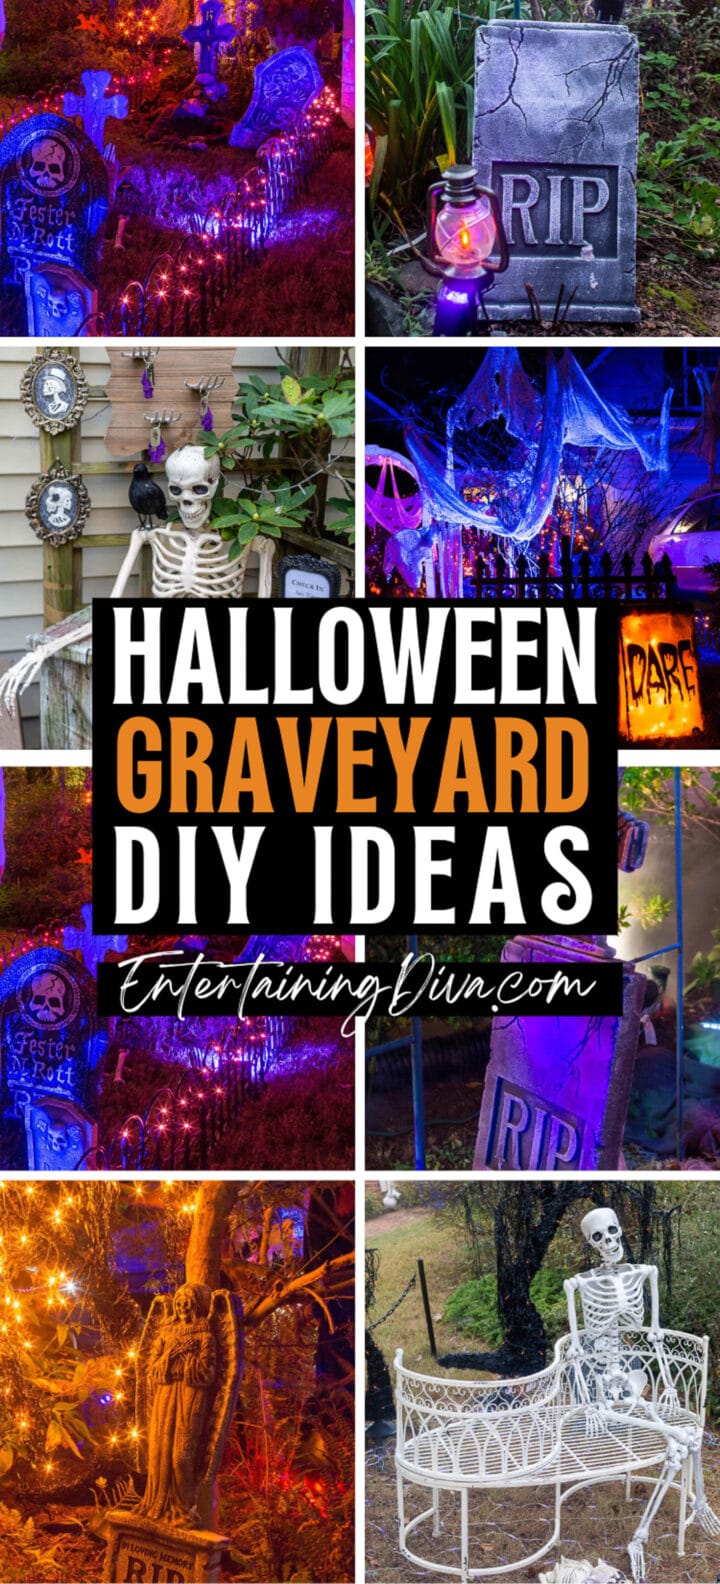 Halloween graveyard DIY ideas